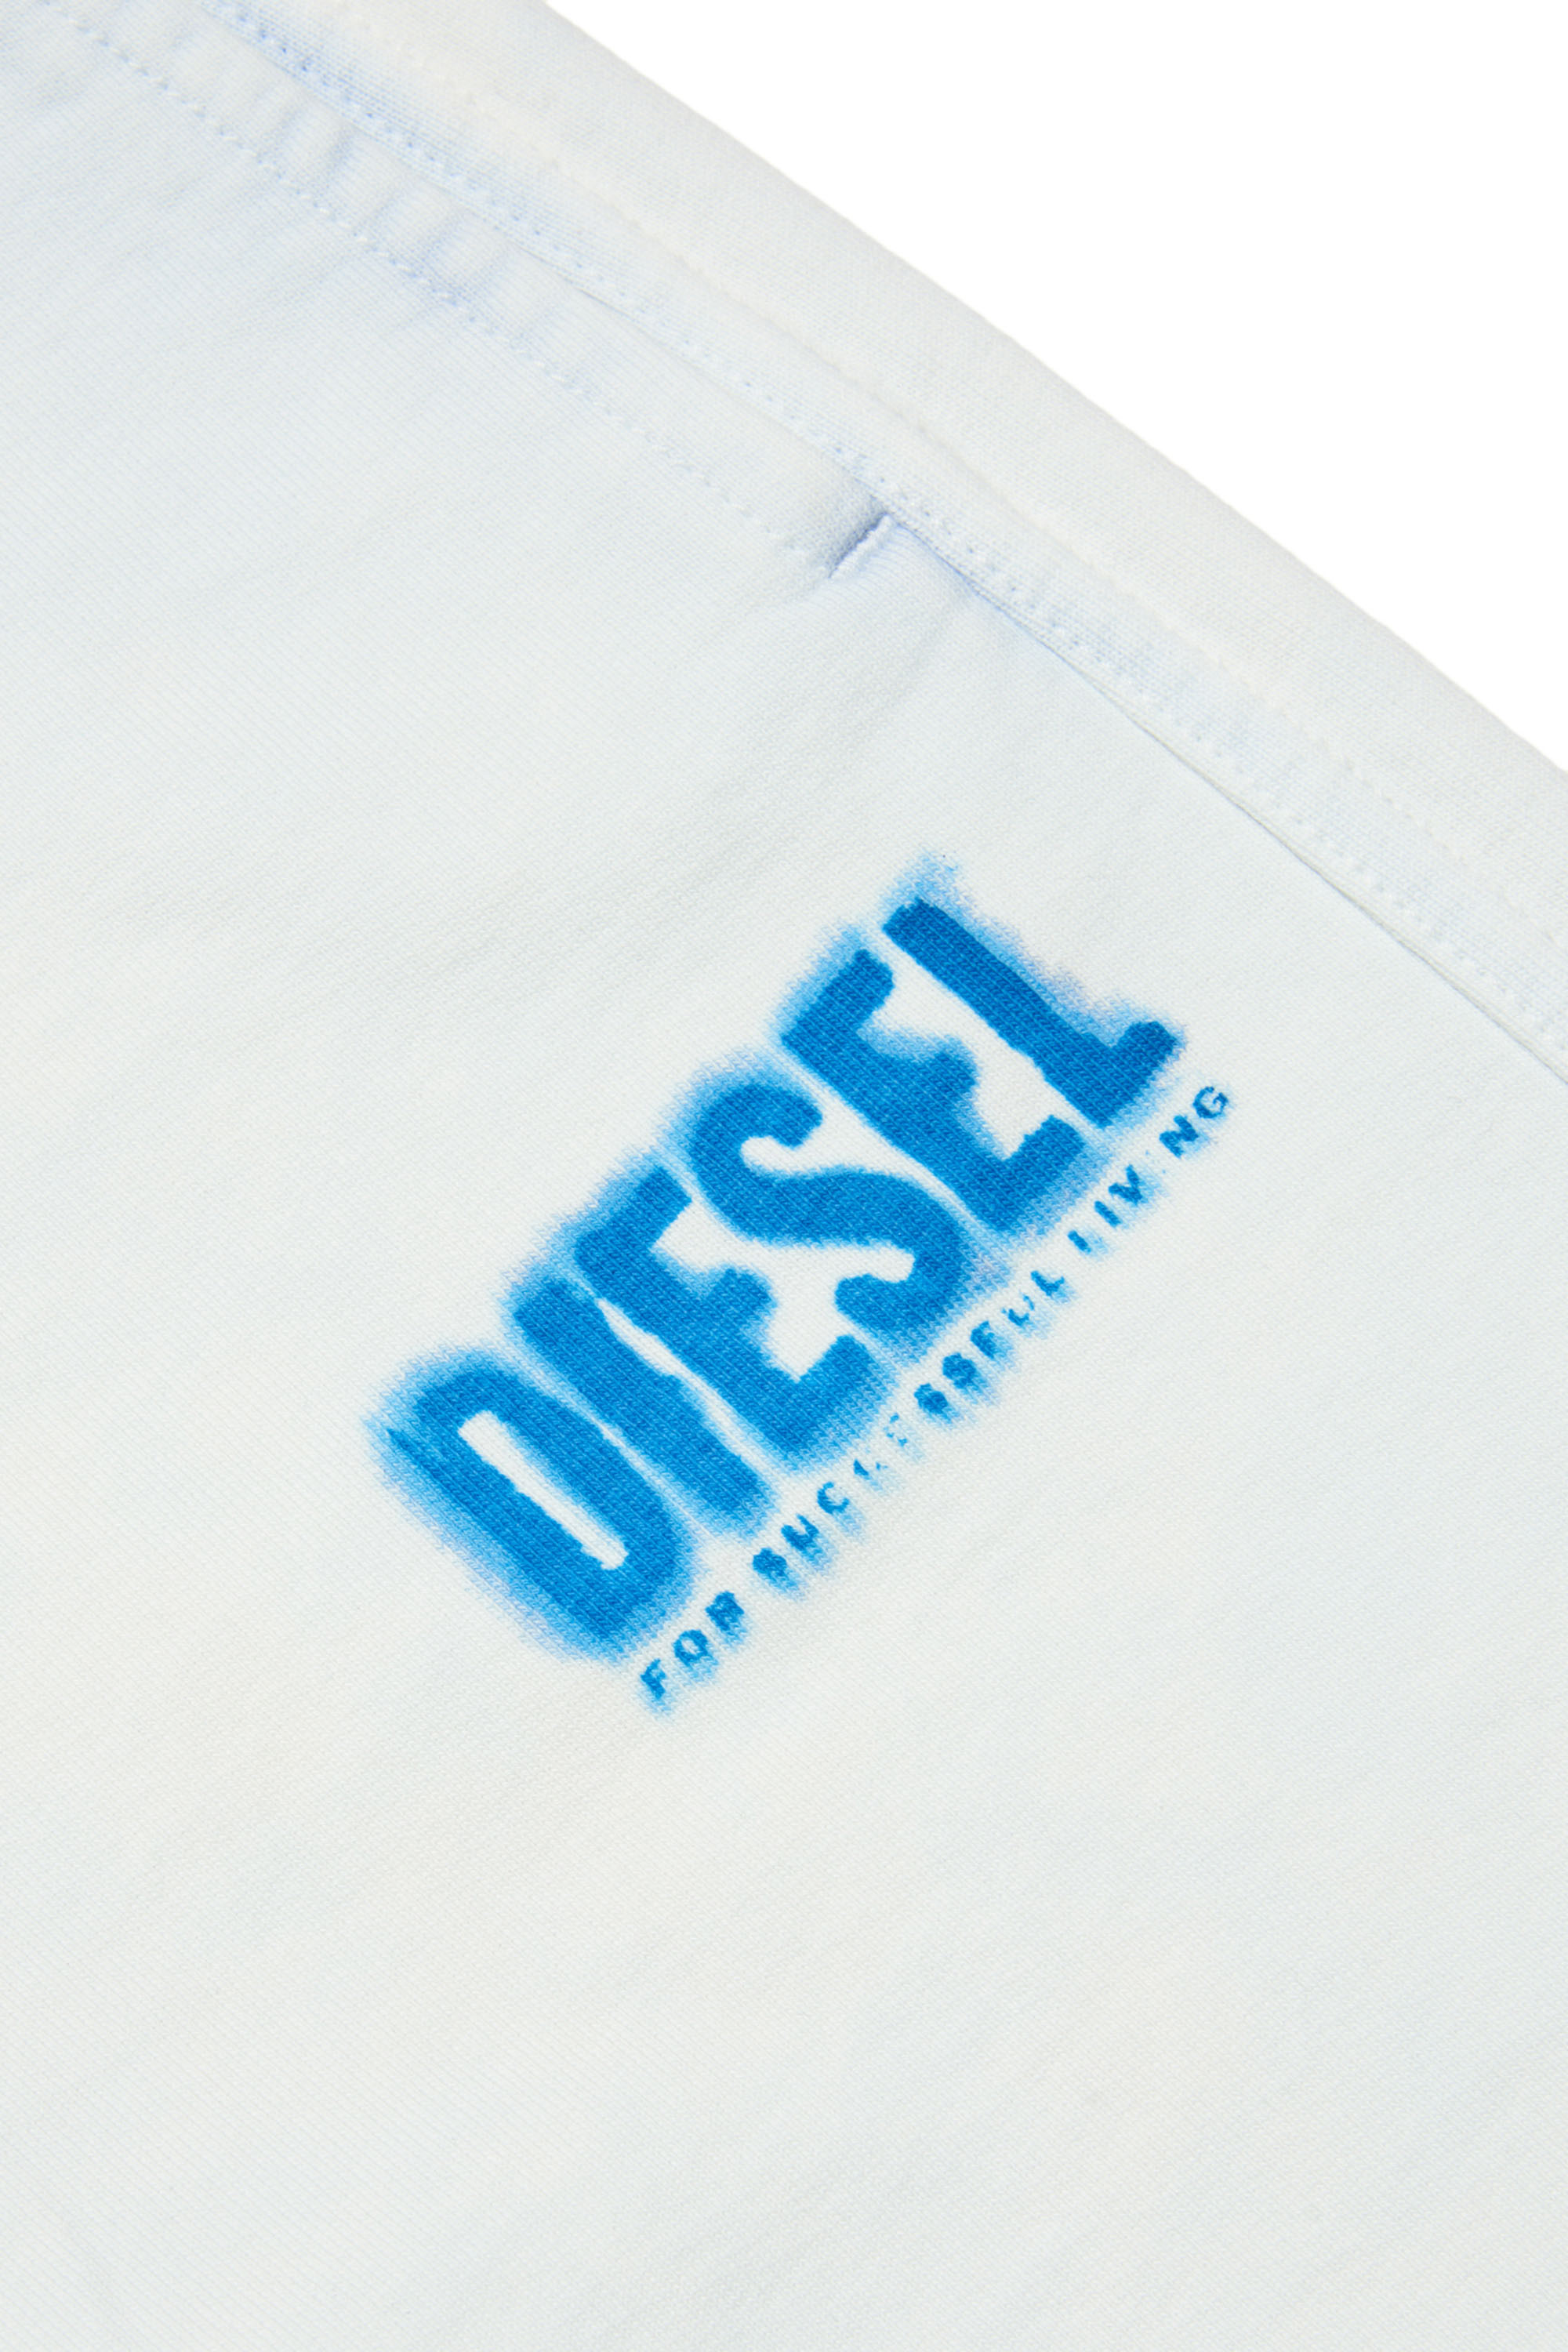 Diesel - PFERTY, White/Blue - Image 3